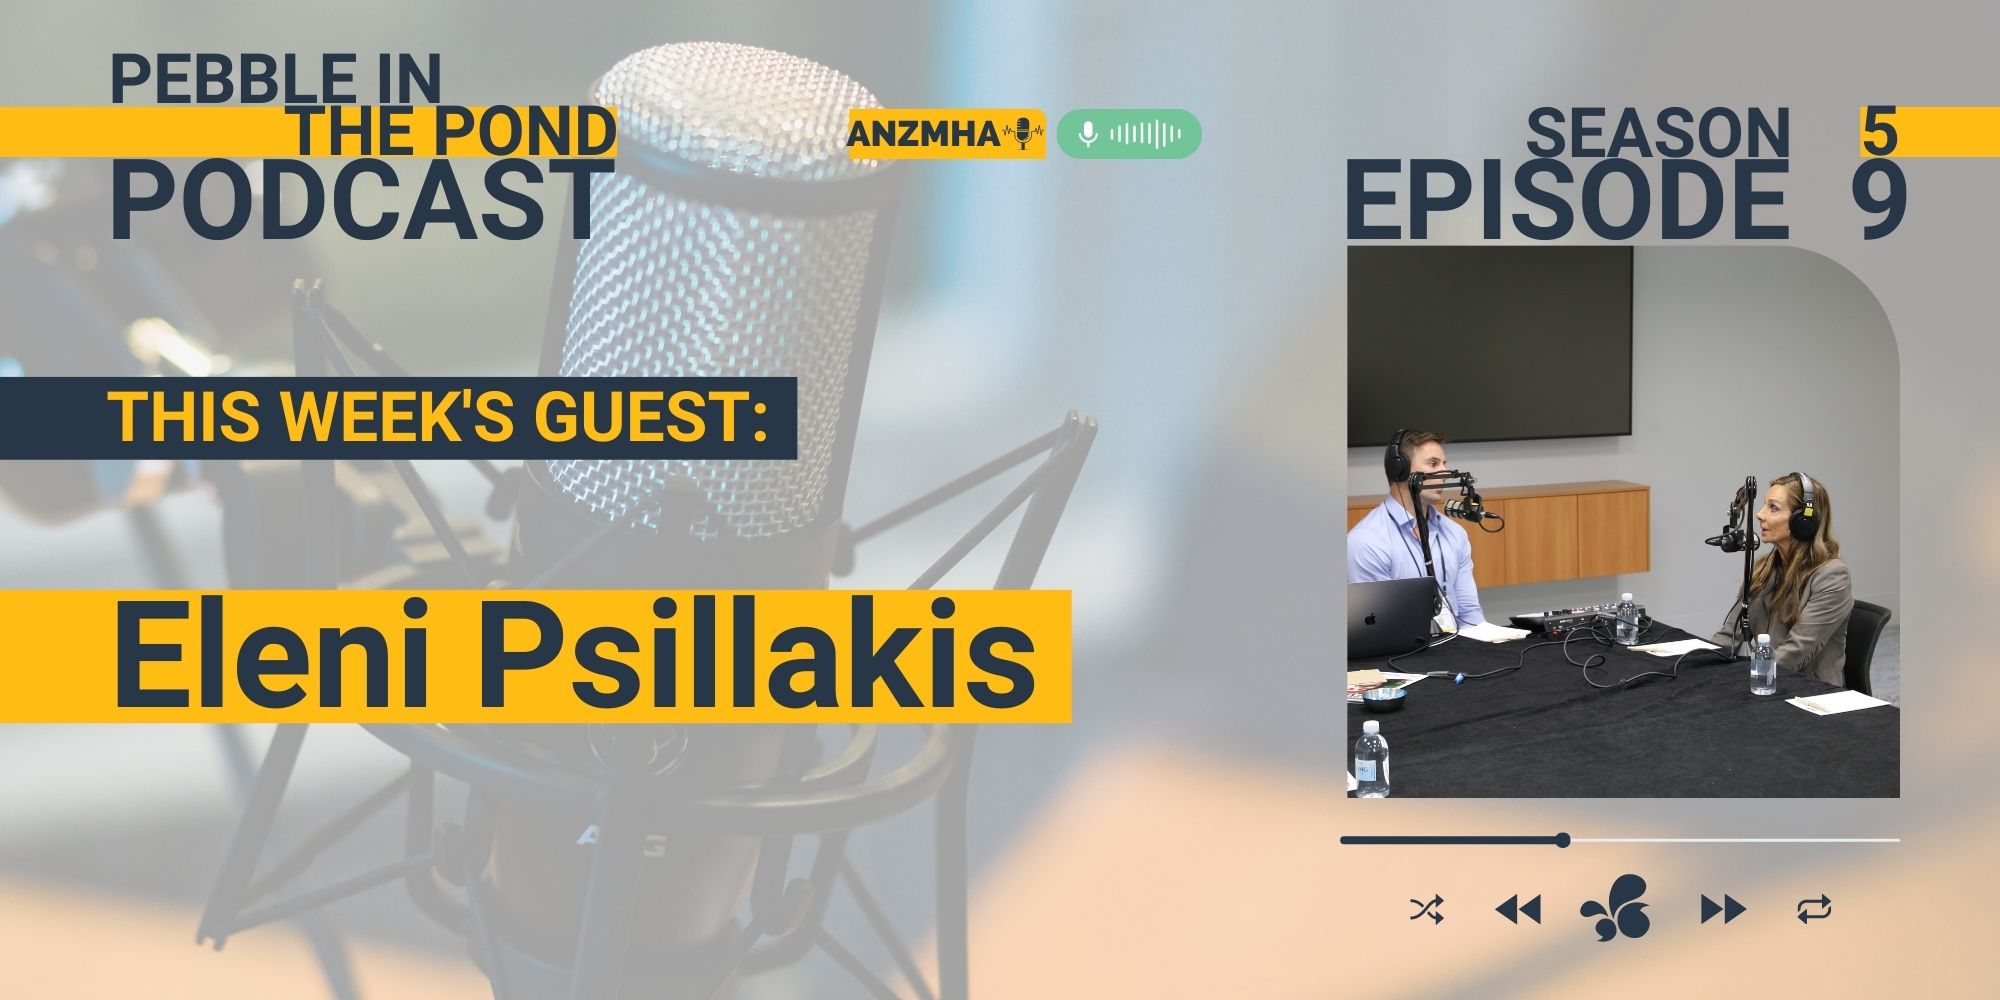 ANZMHA Podcast: Eleni Psillakis